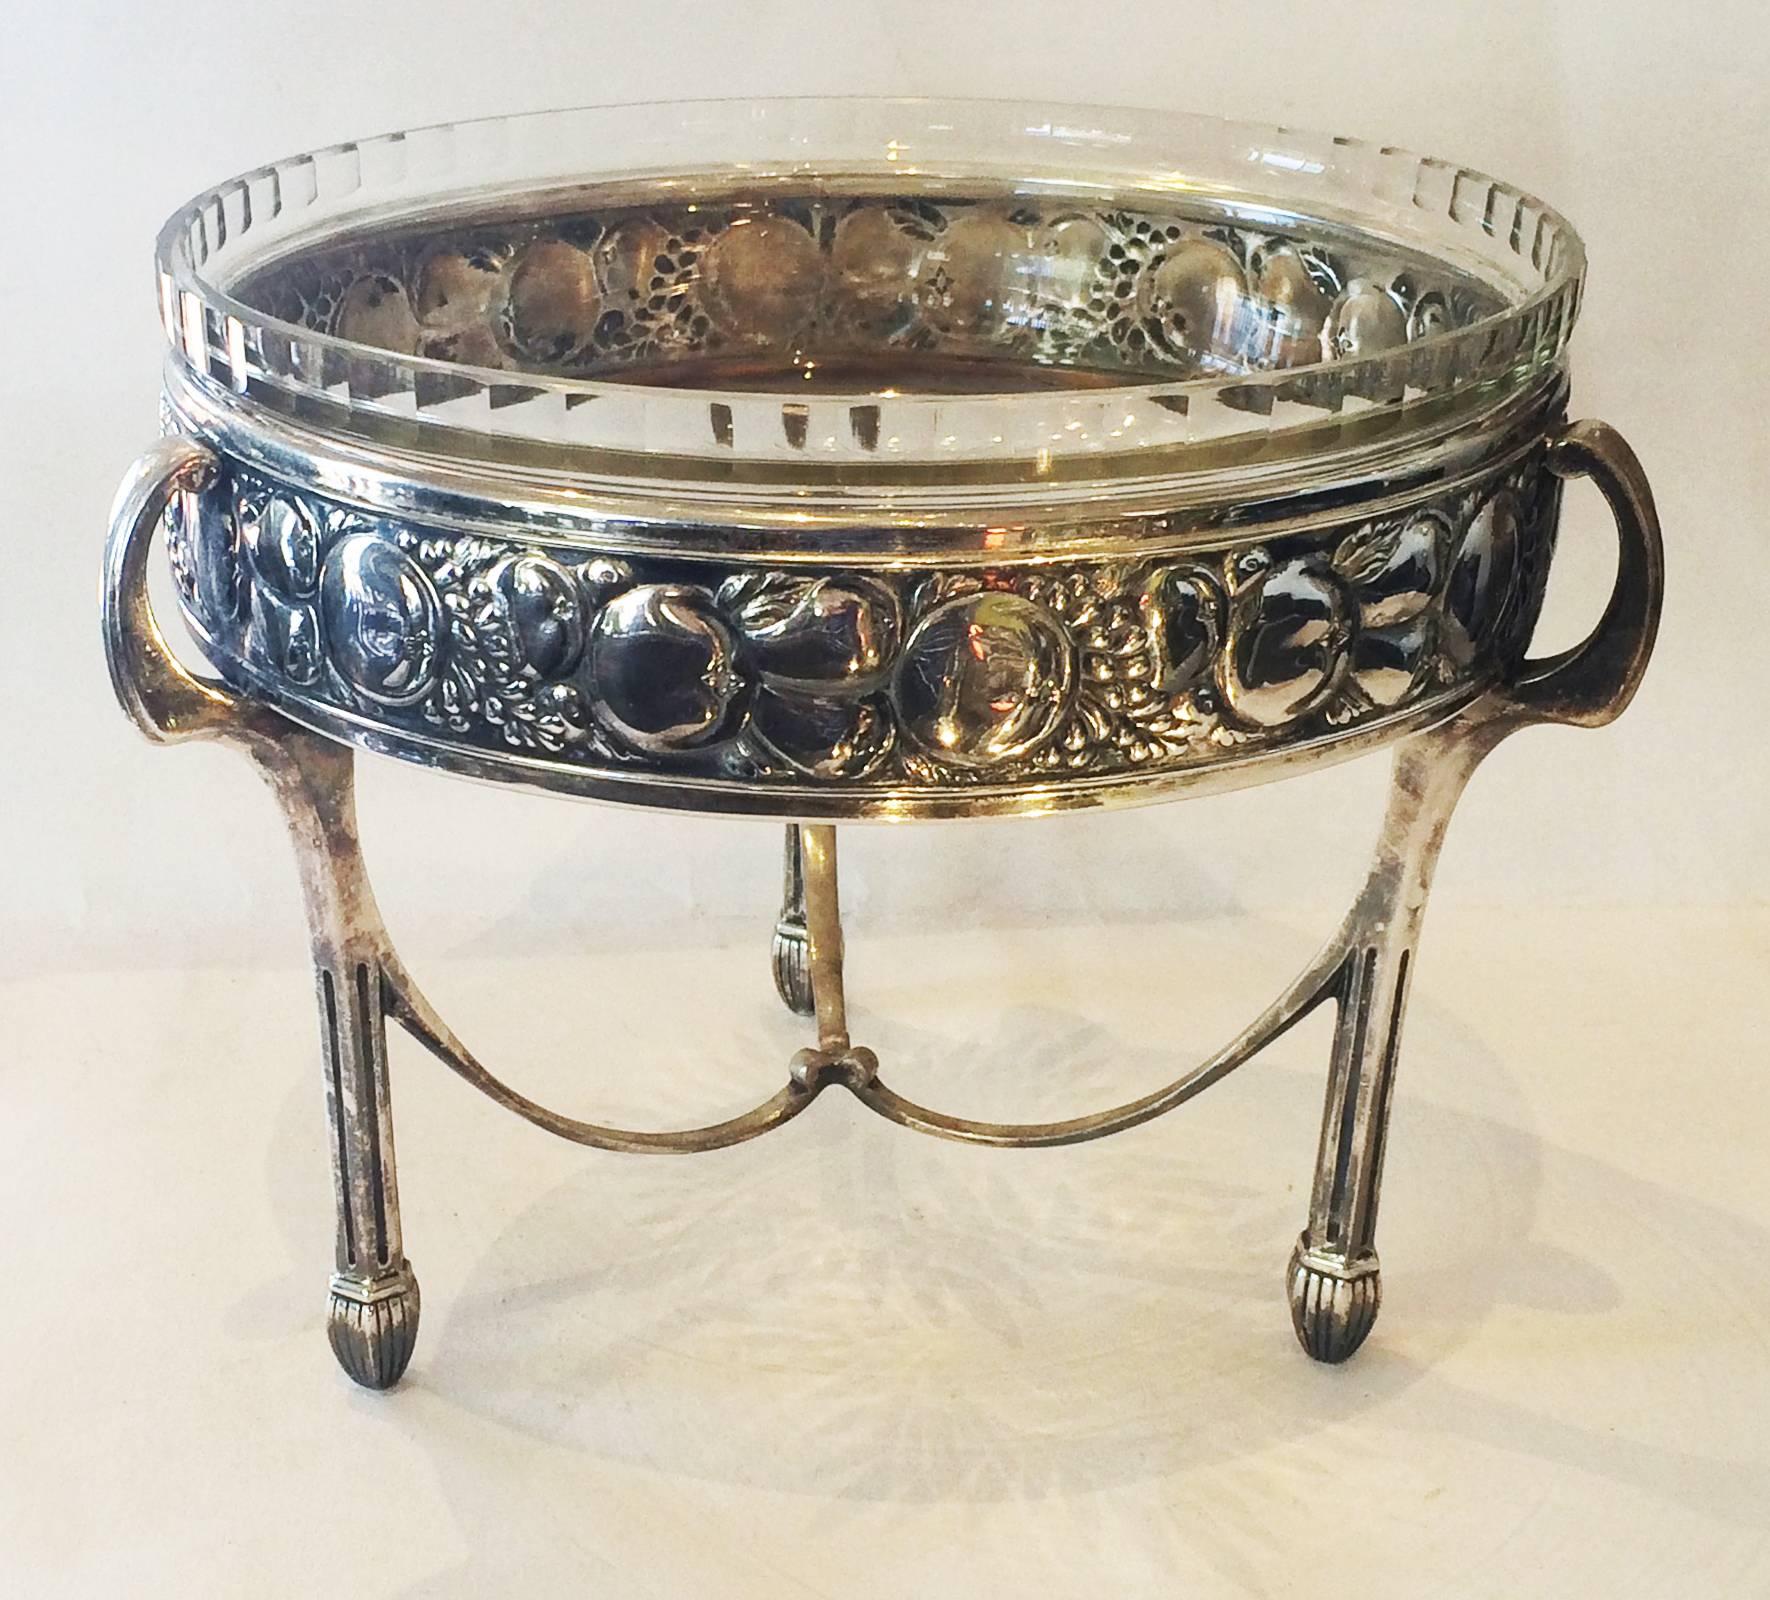 Early 20th Century Art Nouveau WMF Table Centerpiece Fruit Bowl with Original Glass Liner